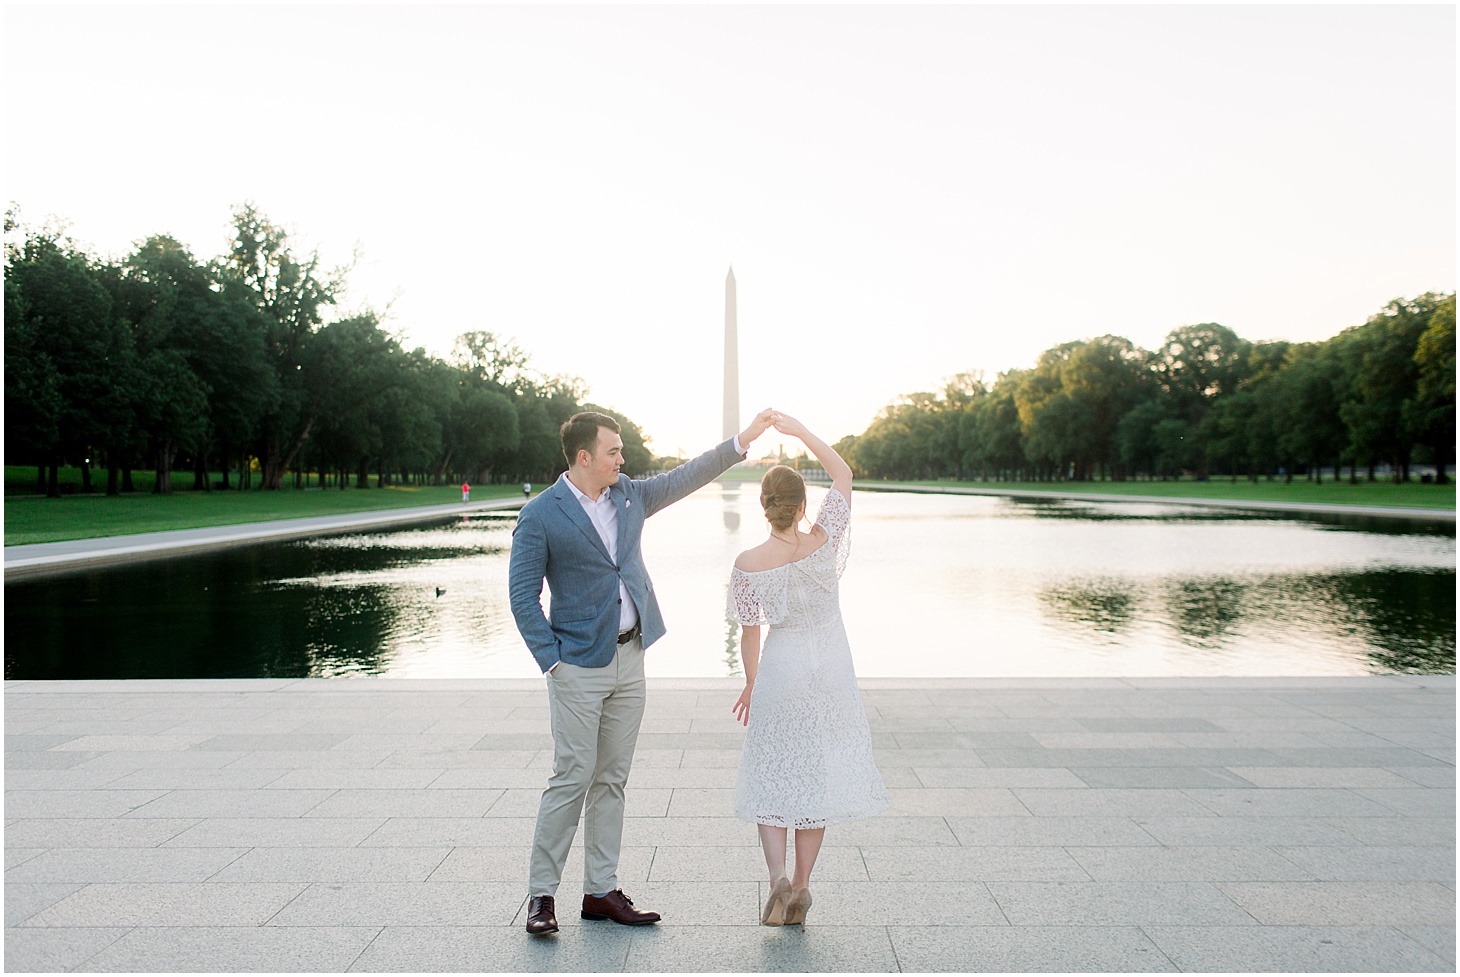 Portraits at the Lincoln Memorial Reflecting Pool, Intimate Sunrise Wedding Portraits at the Lincoln Memorial, Sarah Bradshaw Photography, DC Wedding Photographer